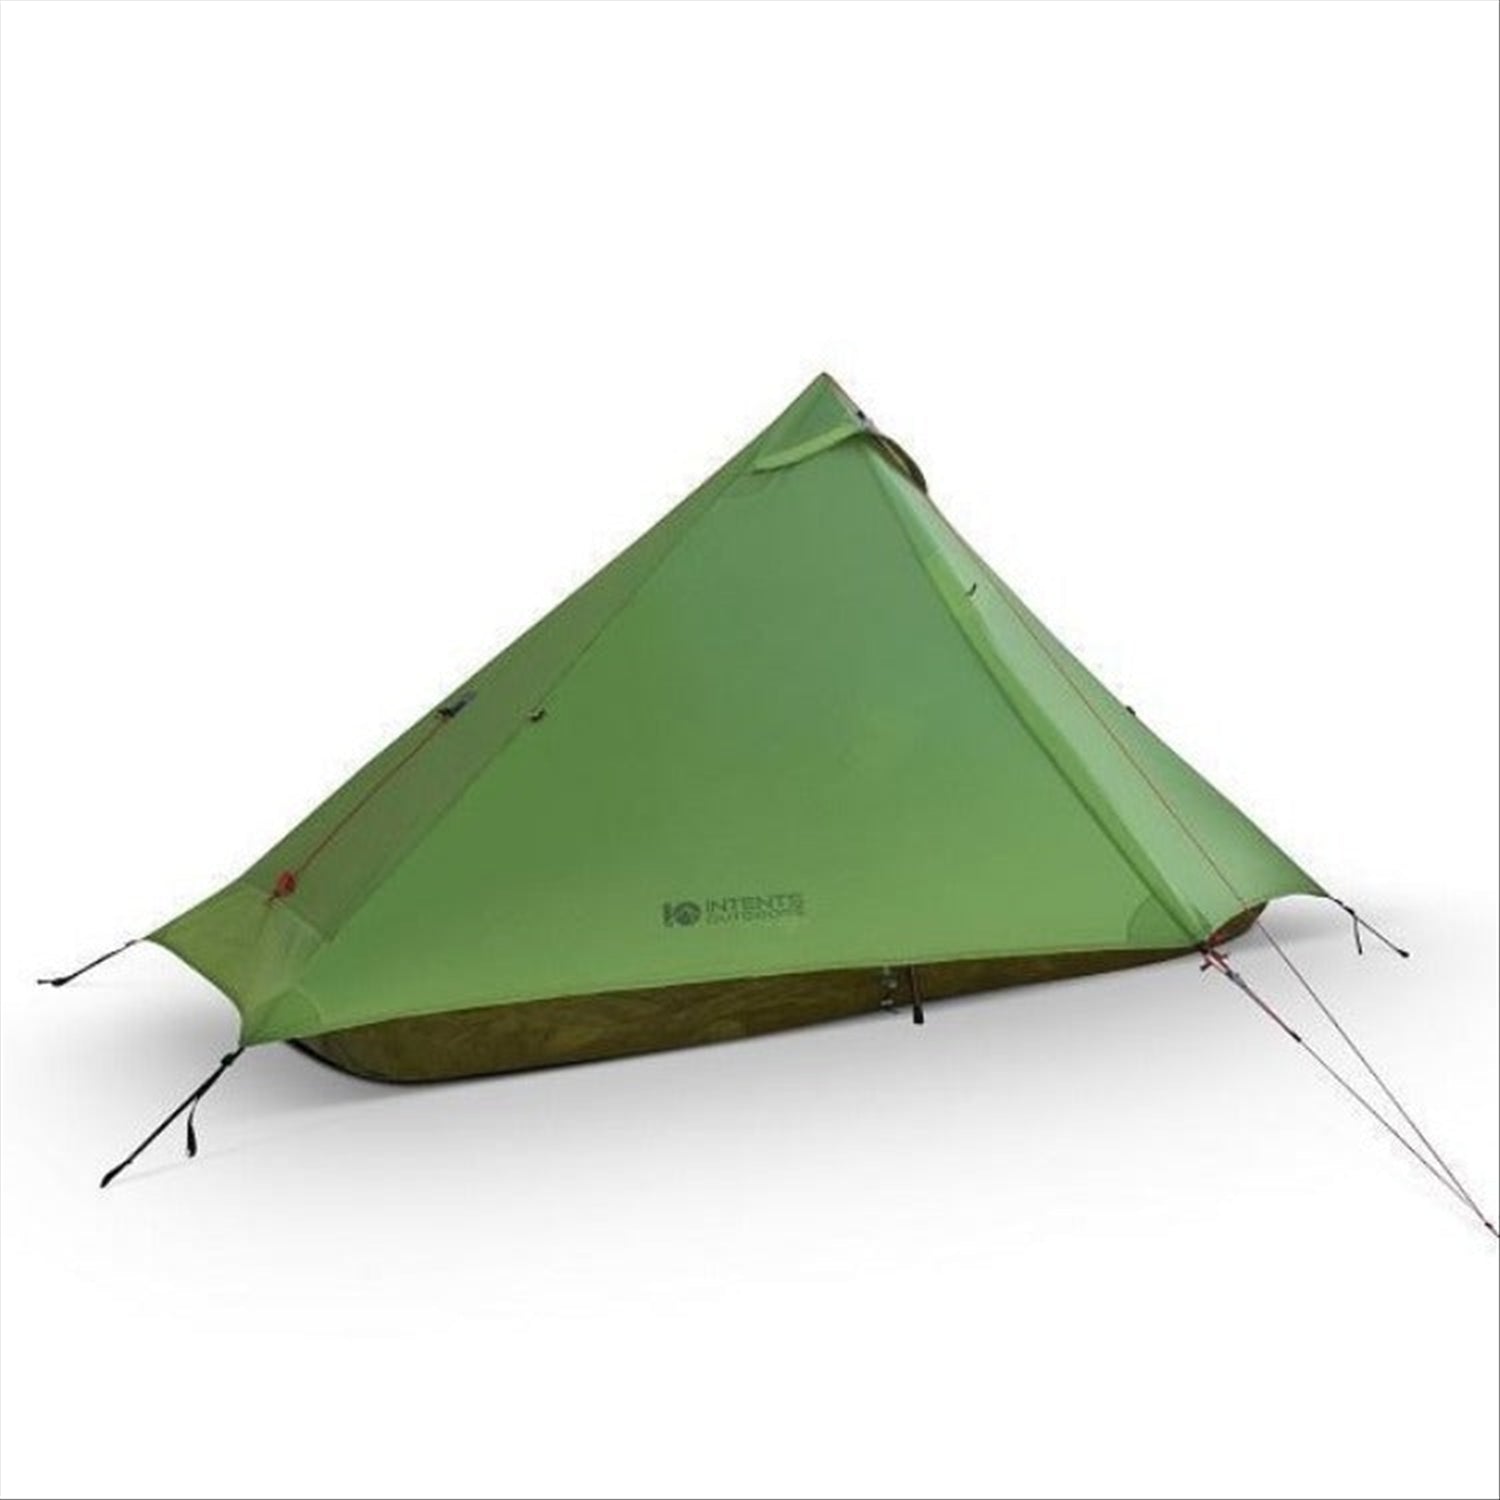 Odyssey 1 - Silnylon 1 person hiking tent, single wall, 990g